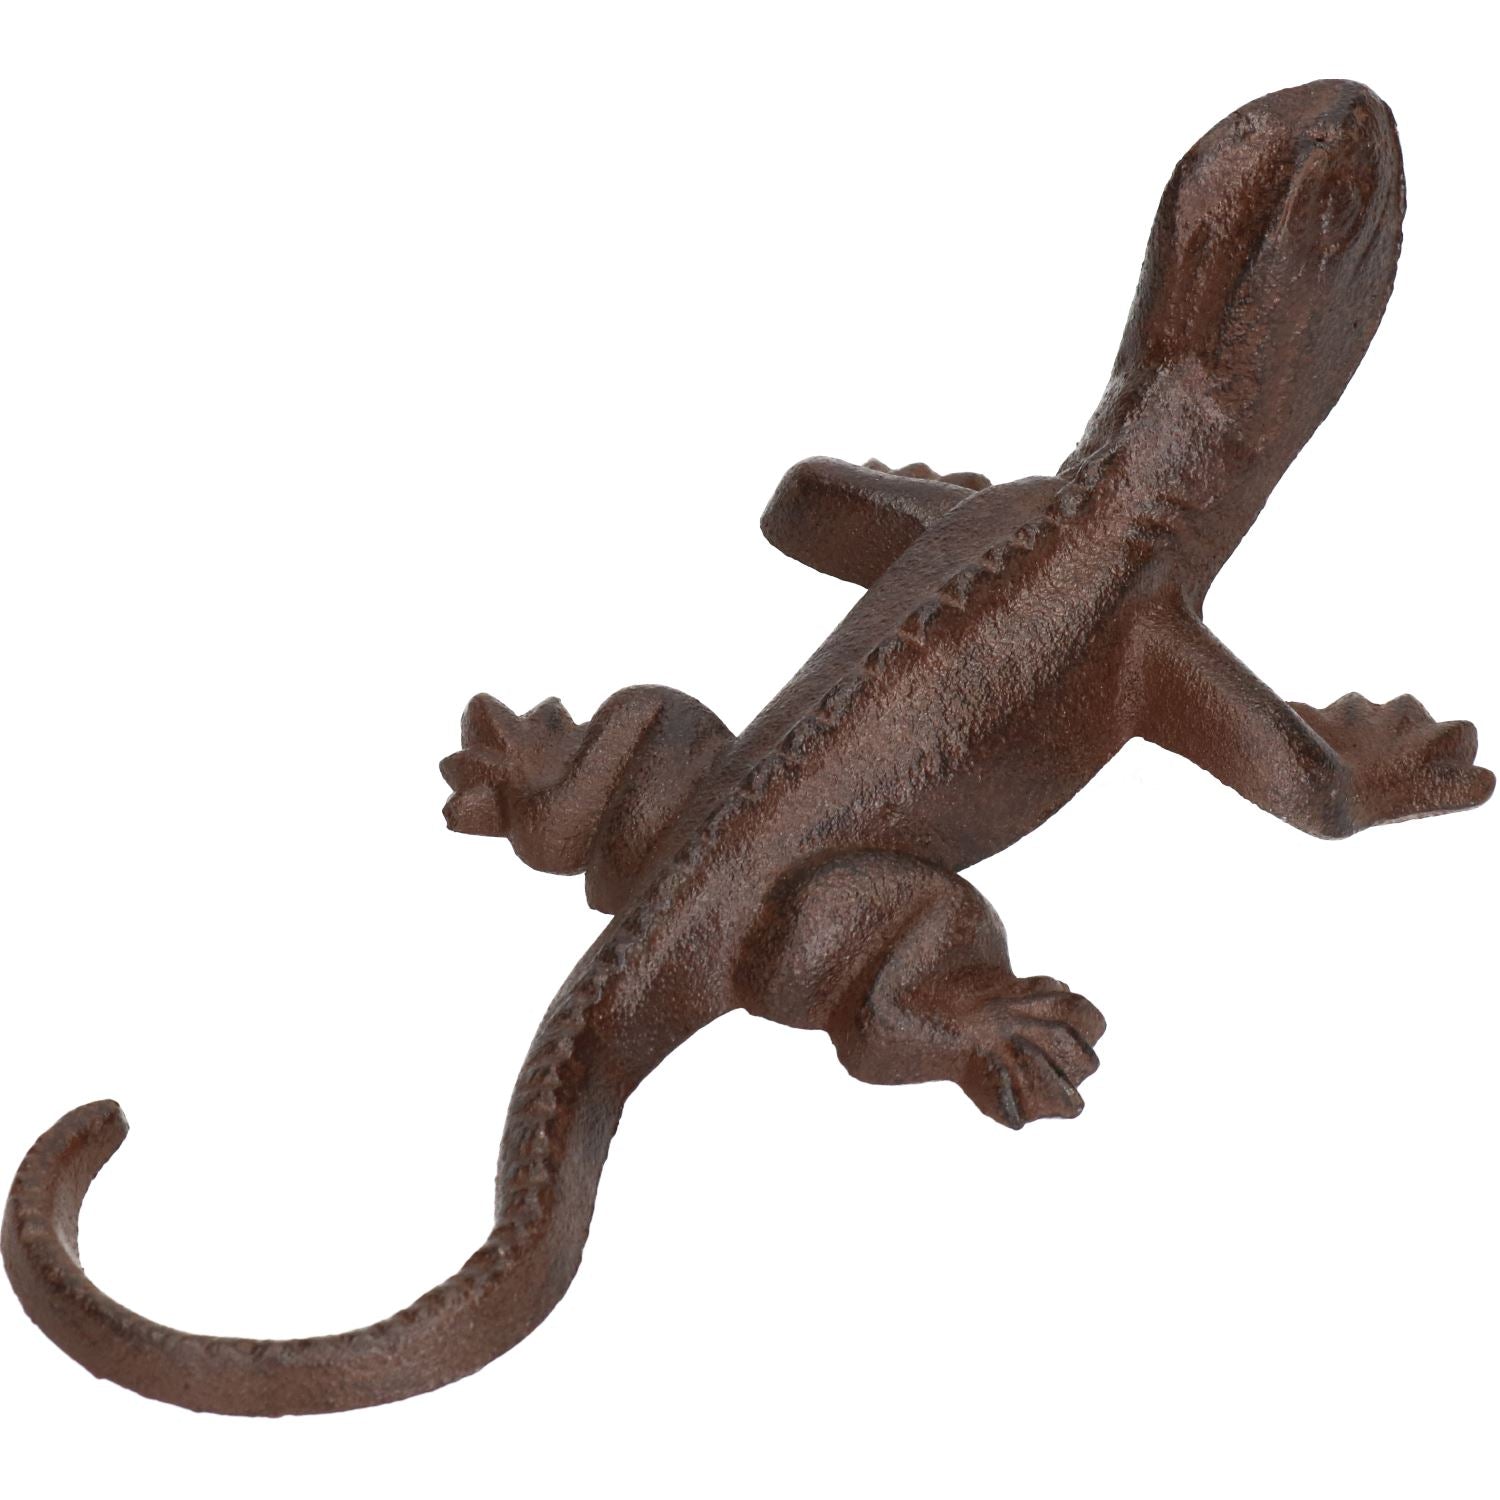 Gecko Lizard Garden Sculpture Ornament Statue Metal Decoration Animal Lawn